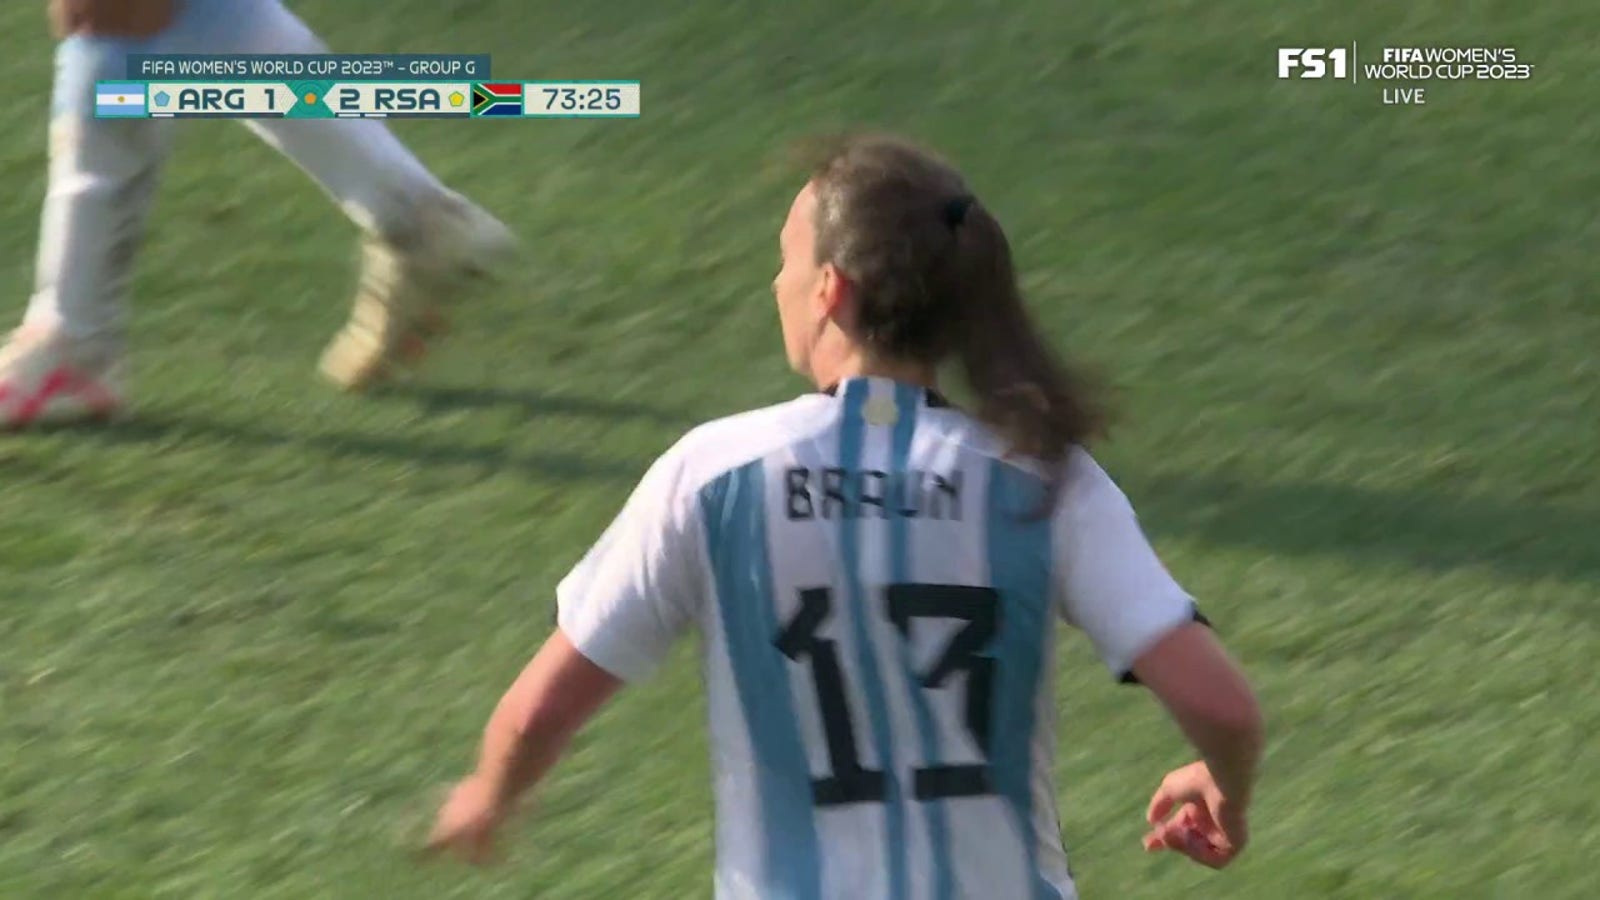 Argentina's Sophia Braun scores goal vs. South Africa in 73'